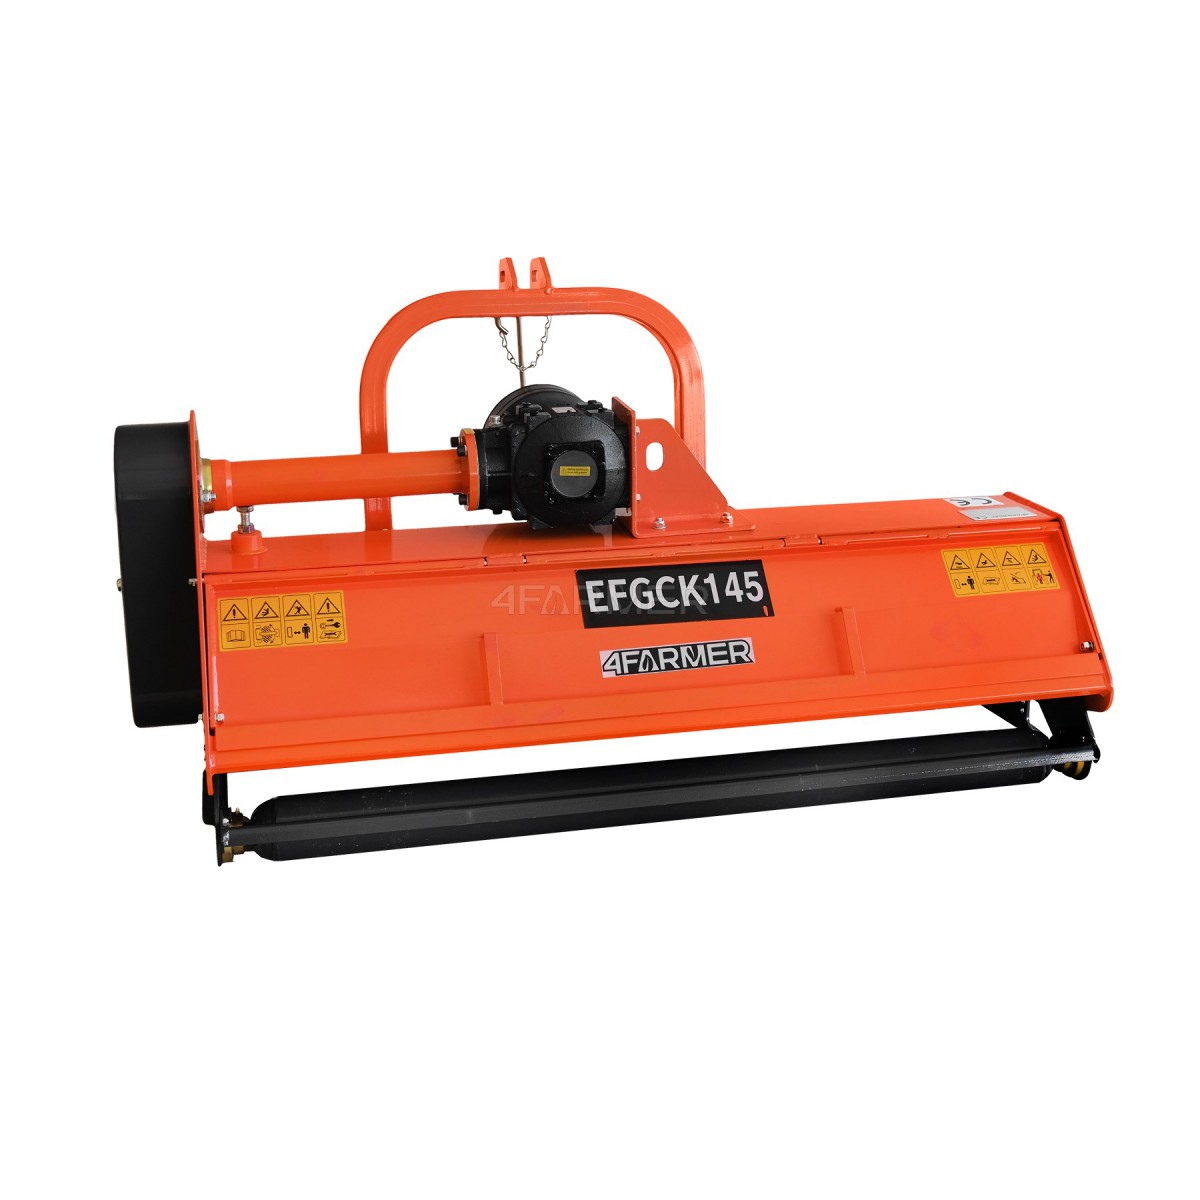 Flail mower EFGC-K 125, opening 4FARMER hatch - orange